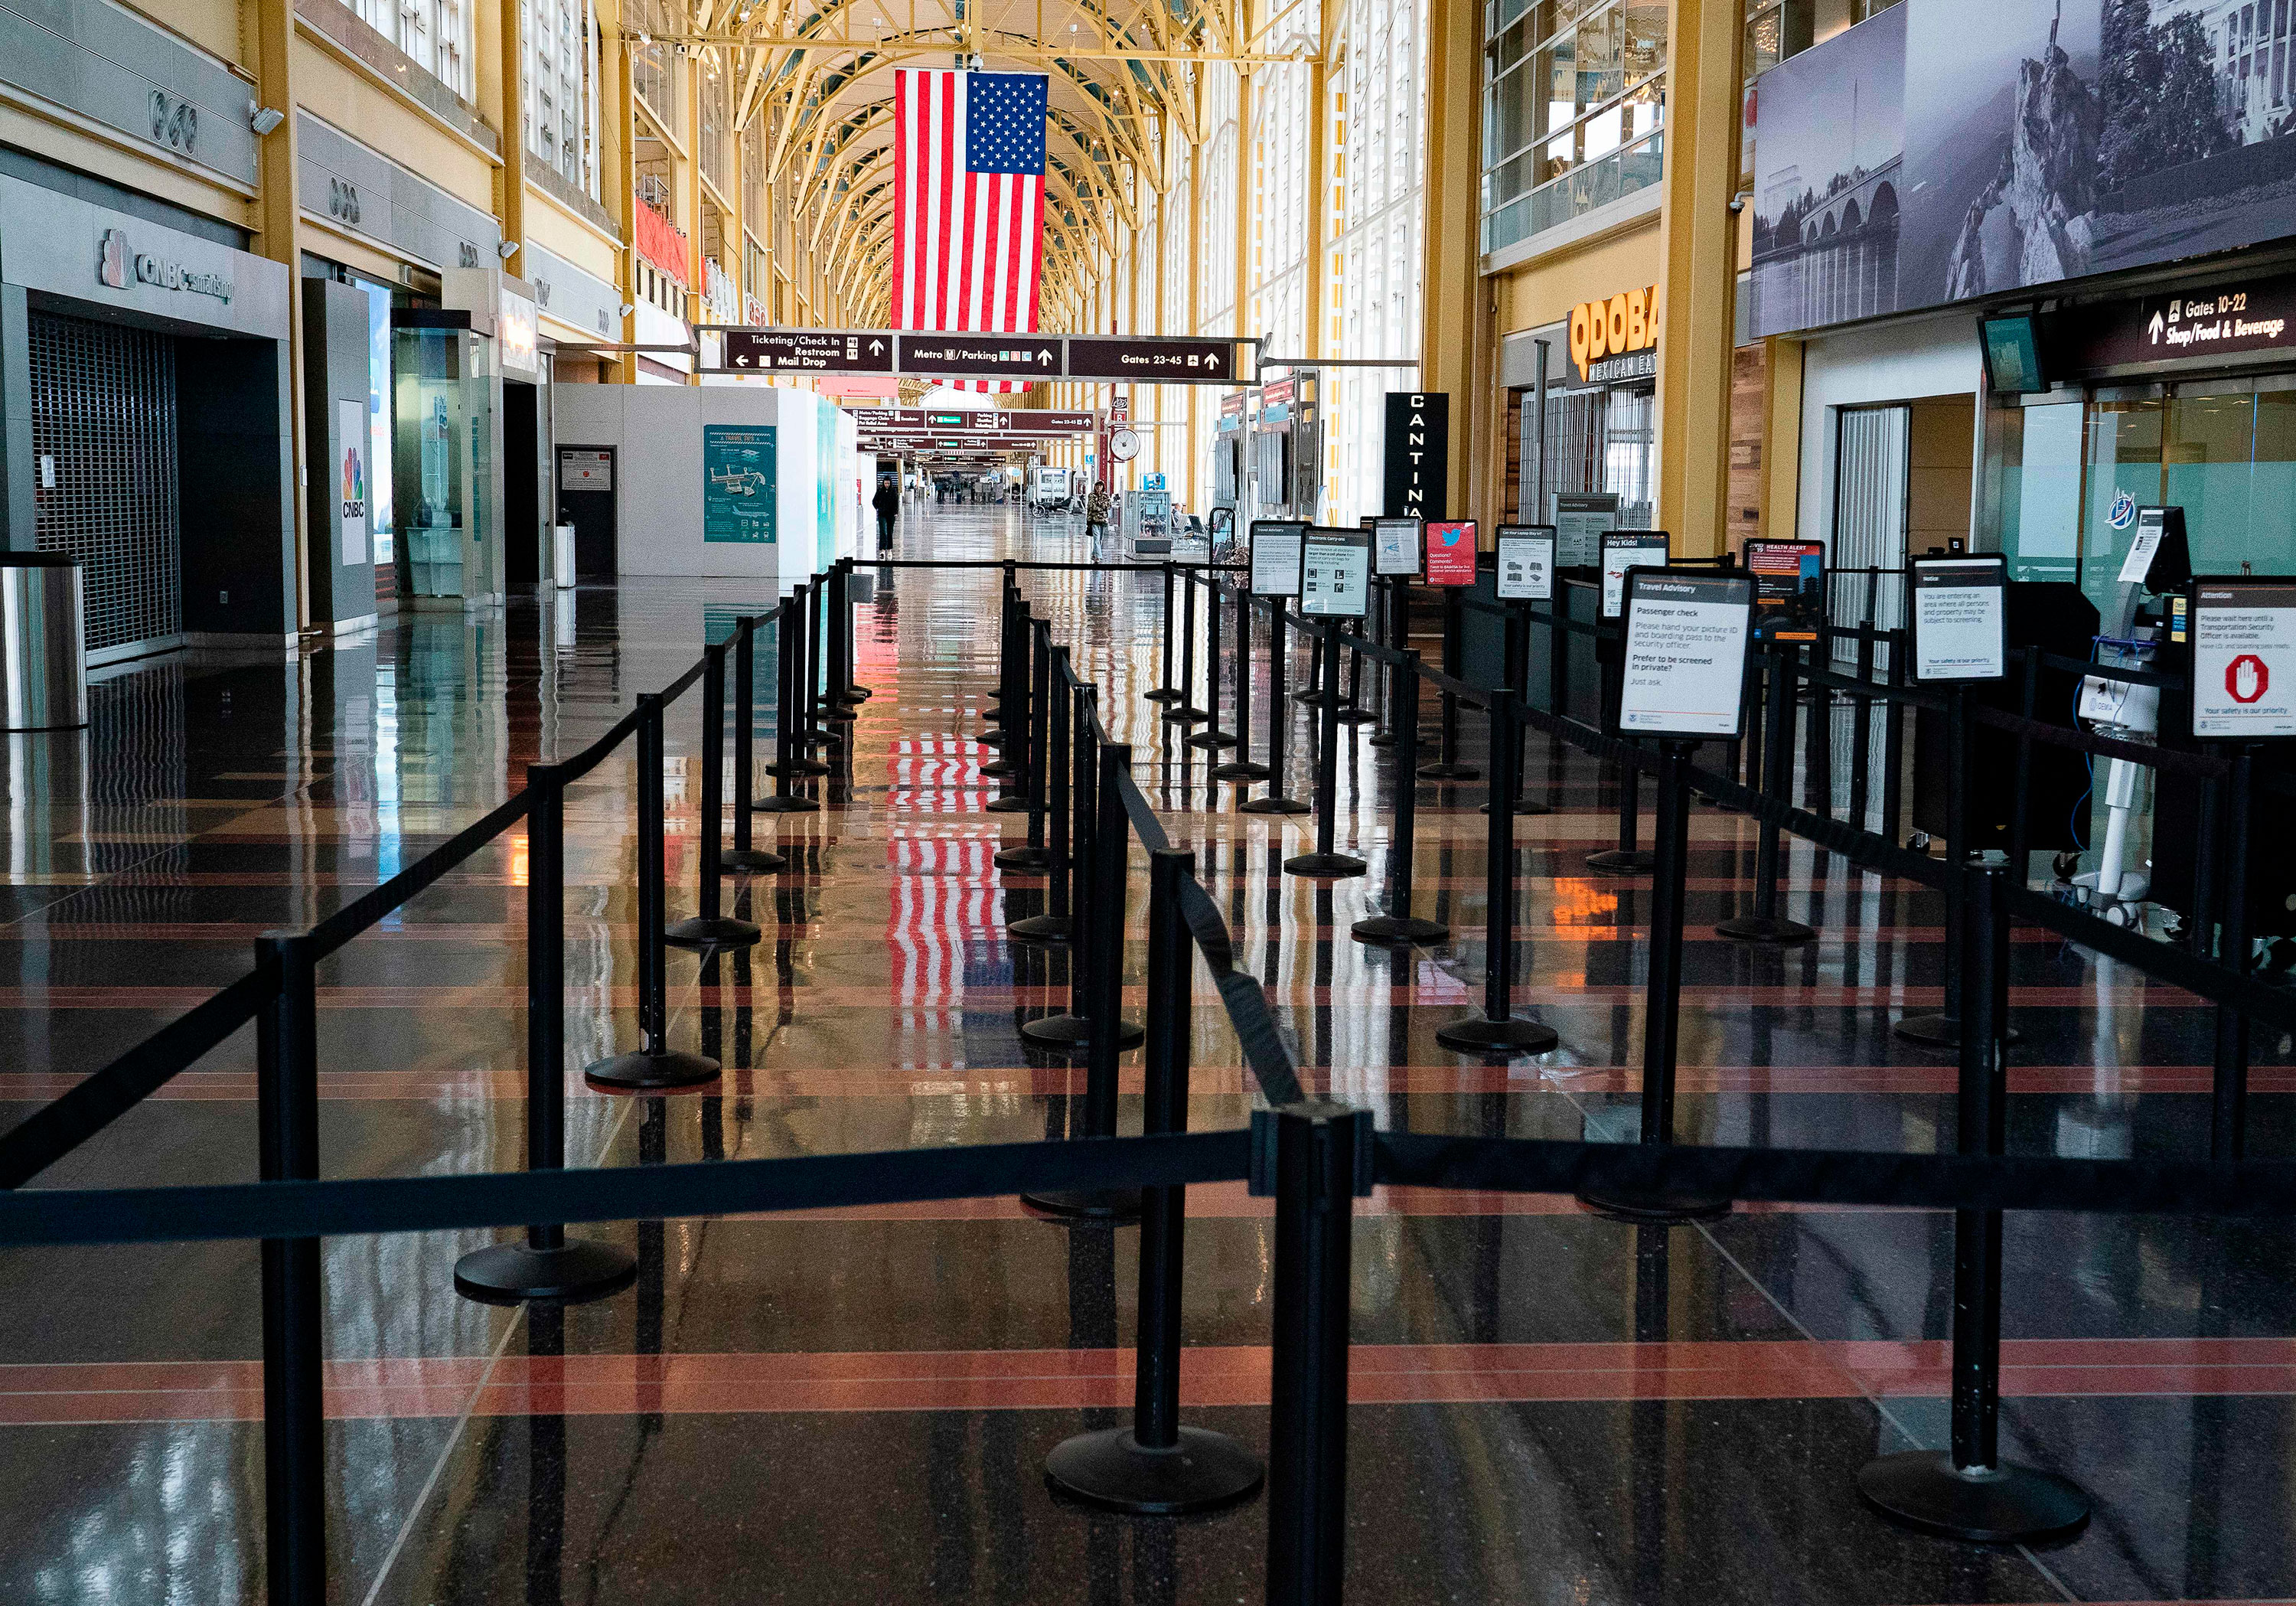 Ronald Reagan Washington National Airport on March 29.